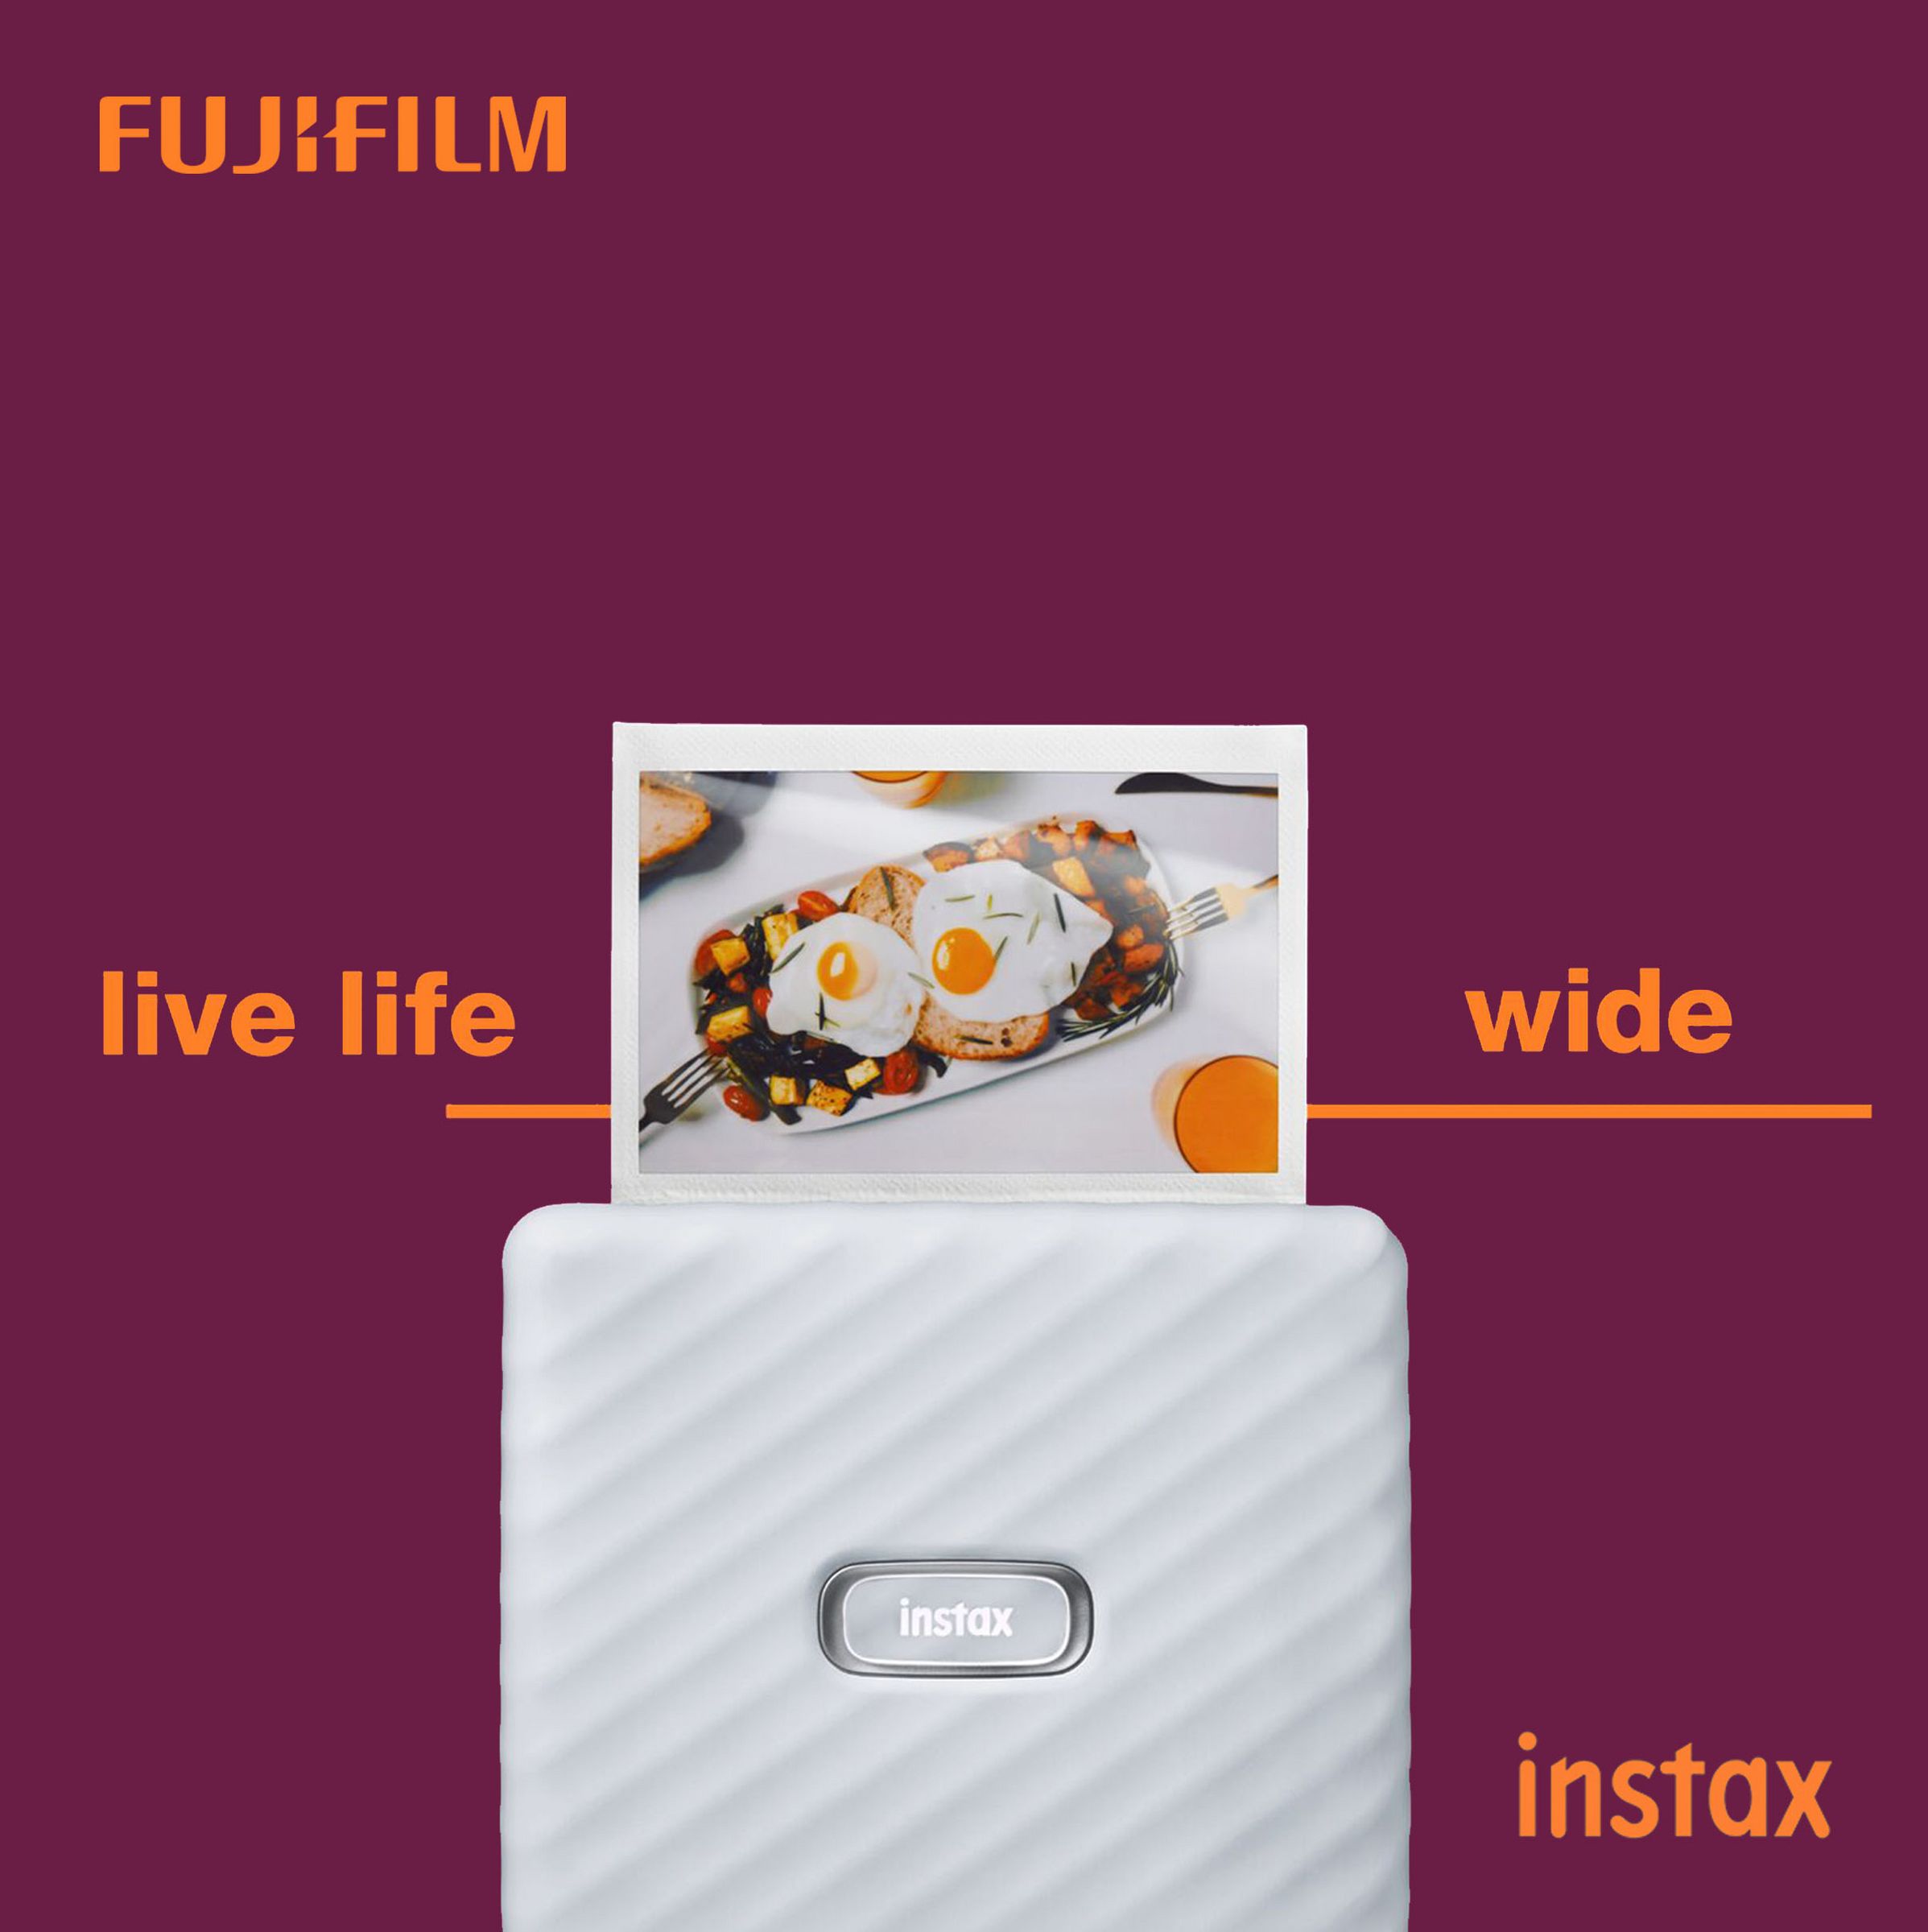 Fujifilm Instax Wide